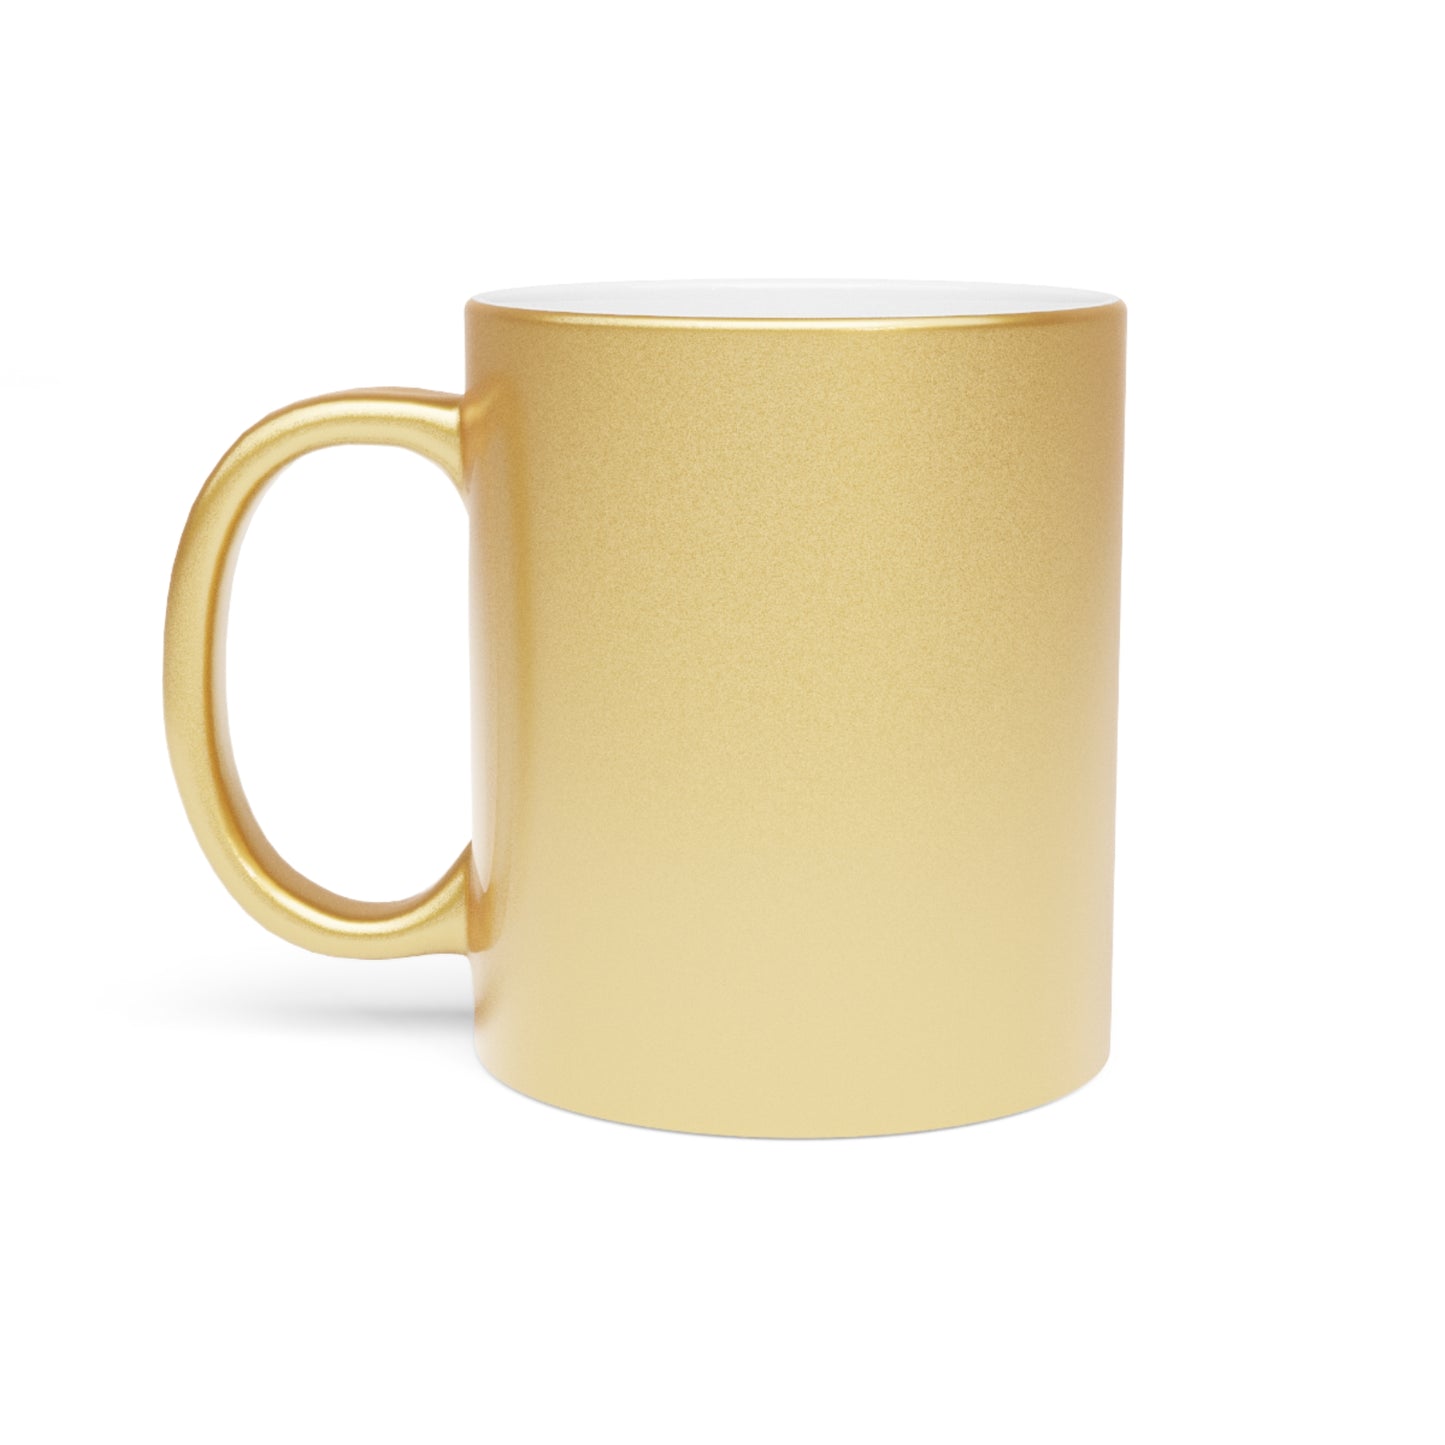 miami metallic gold mug.